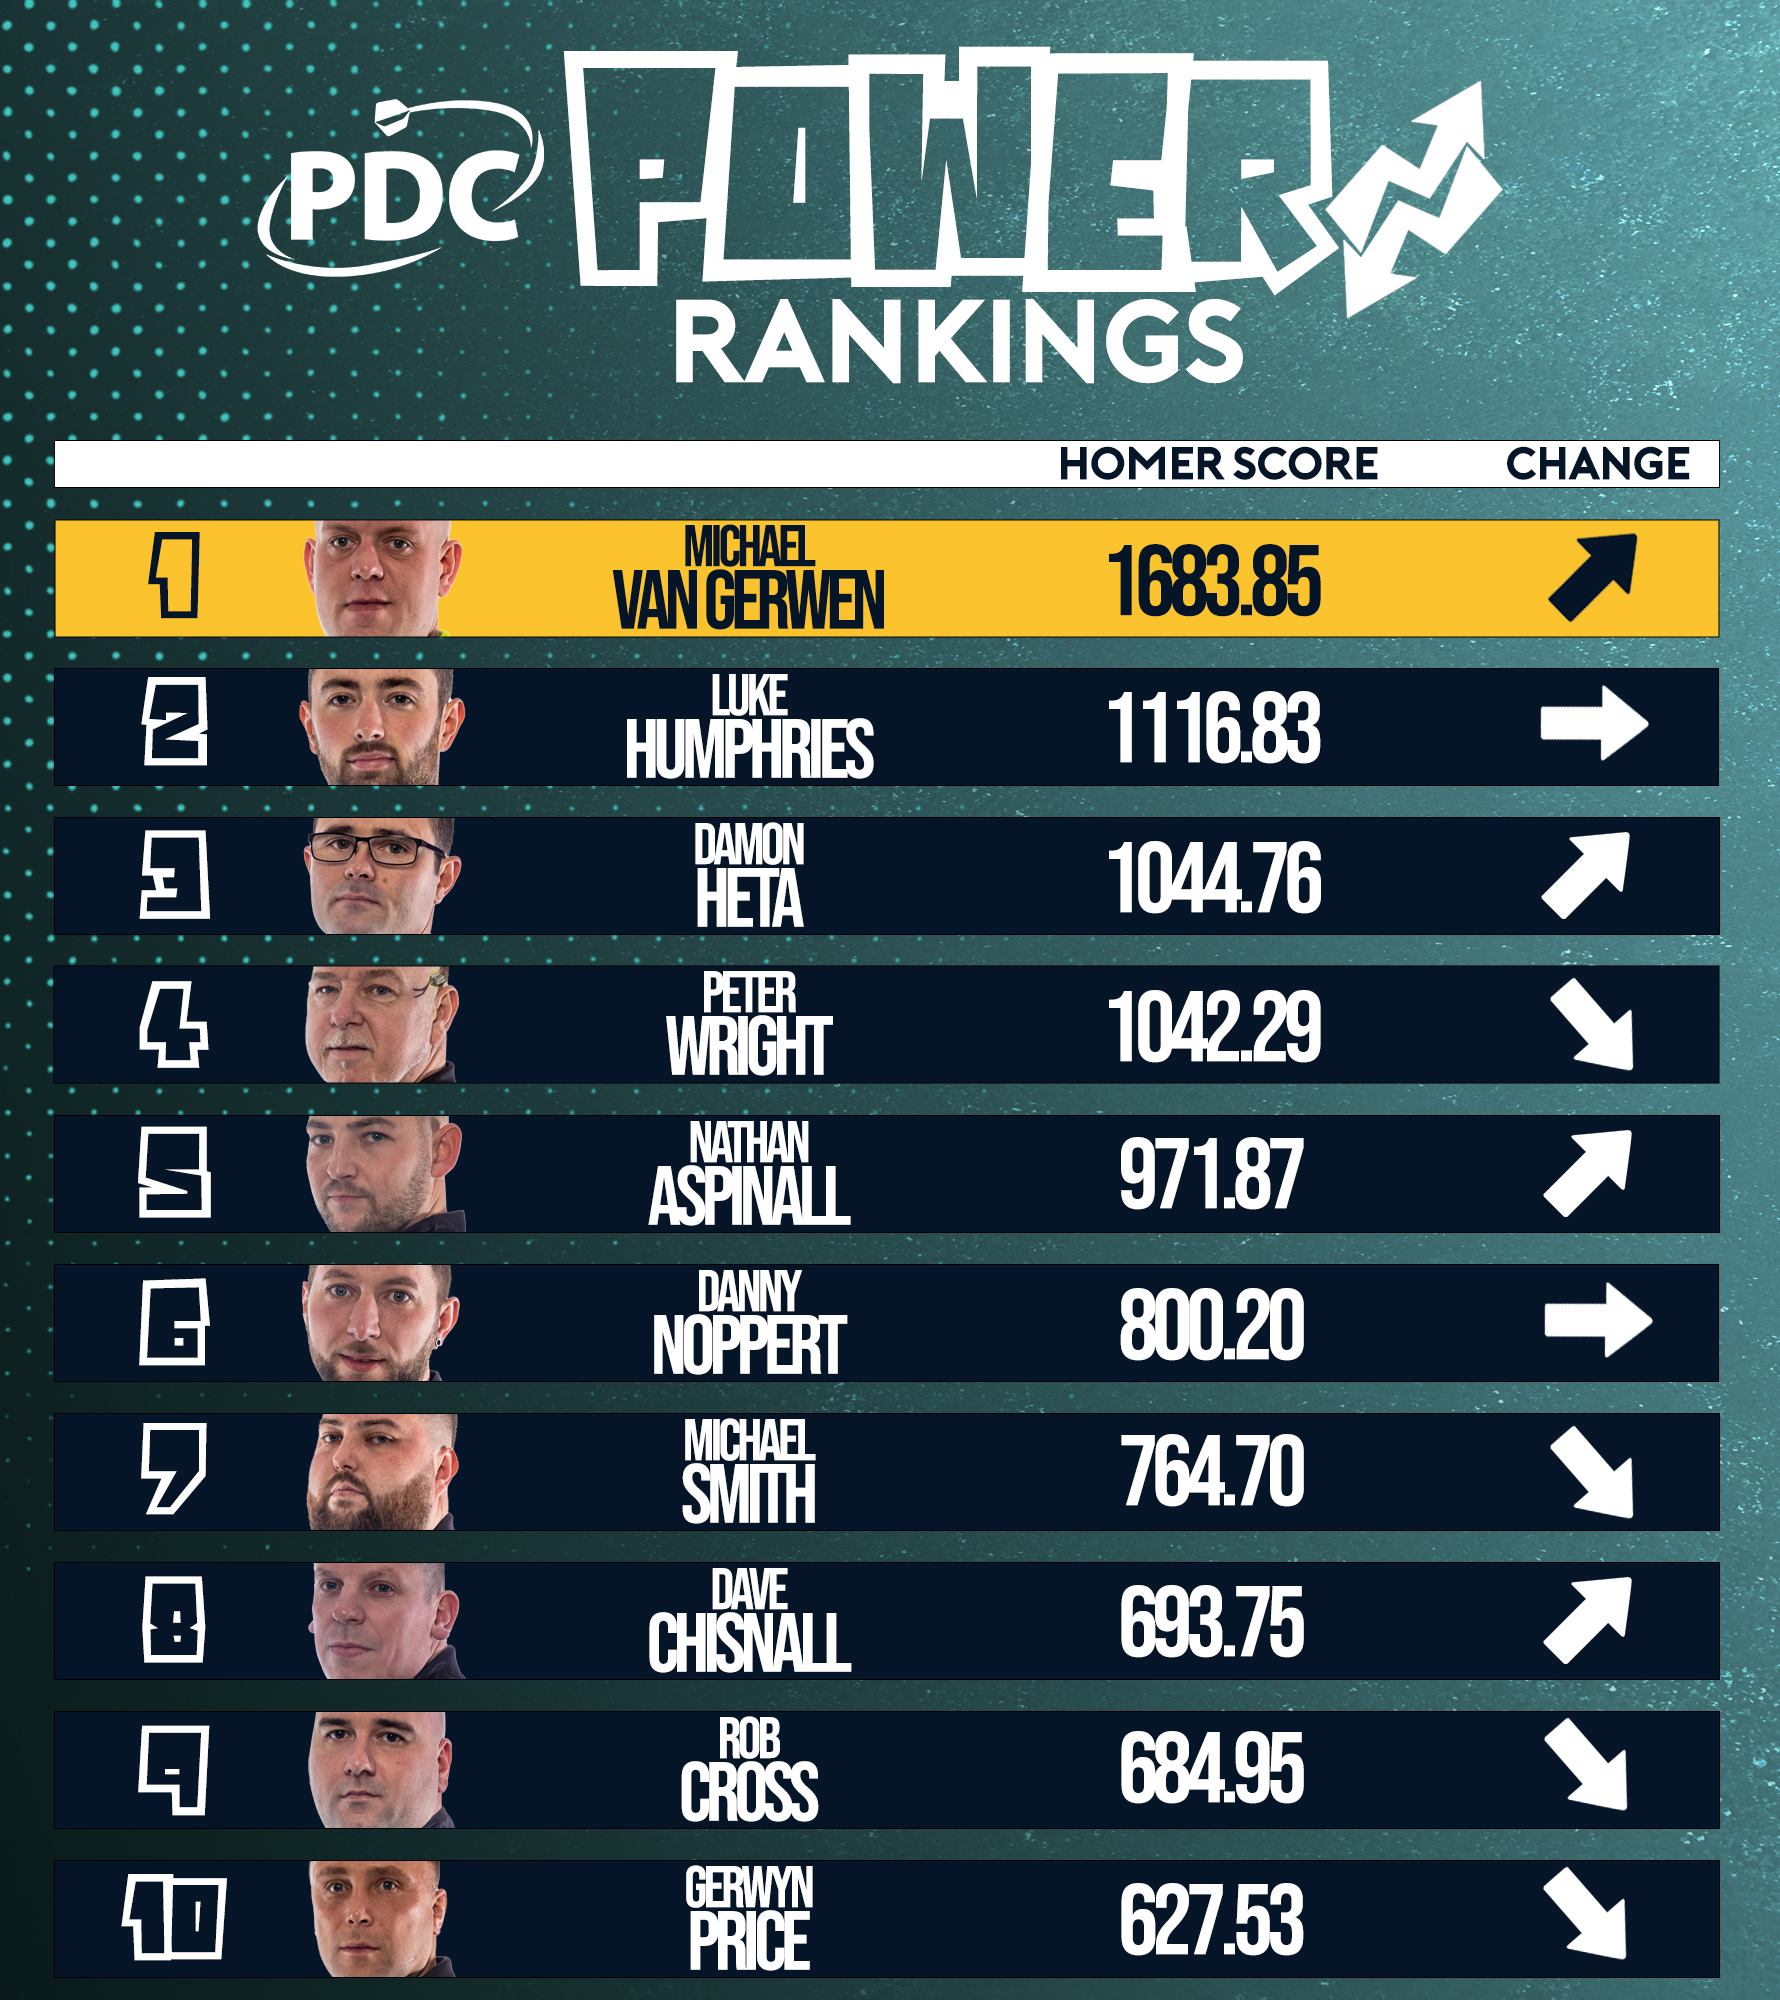 Darts Power Rankings